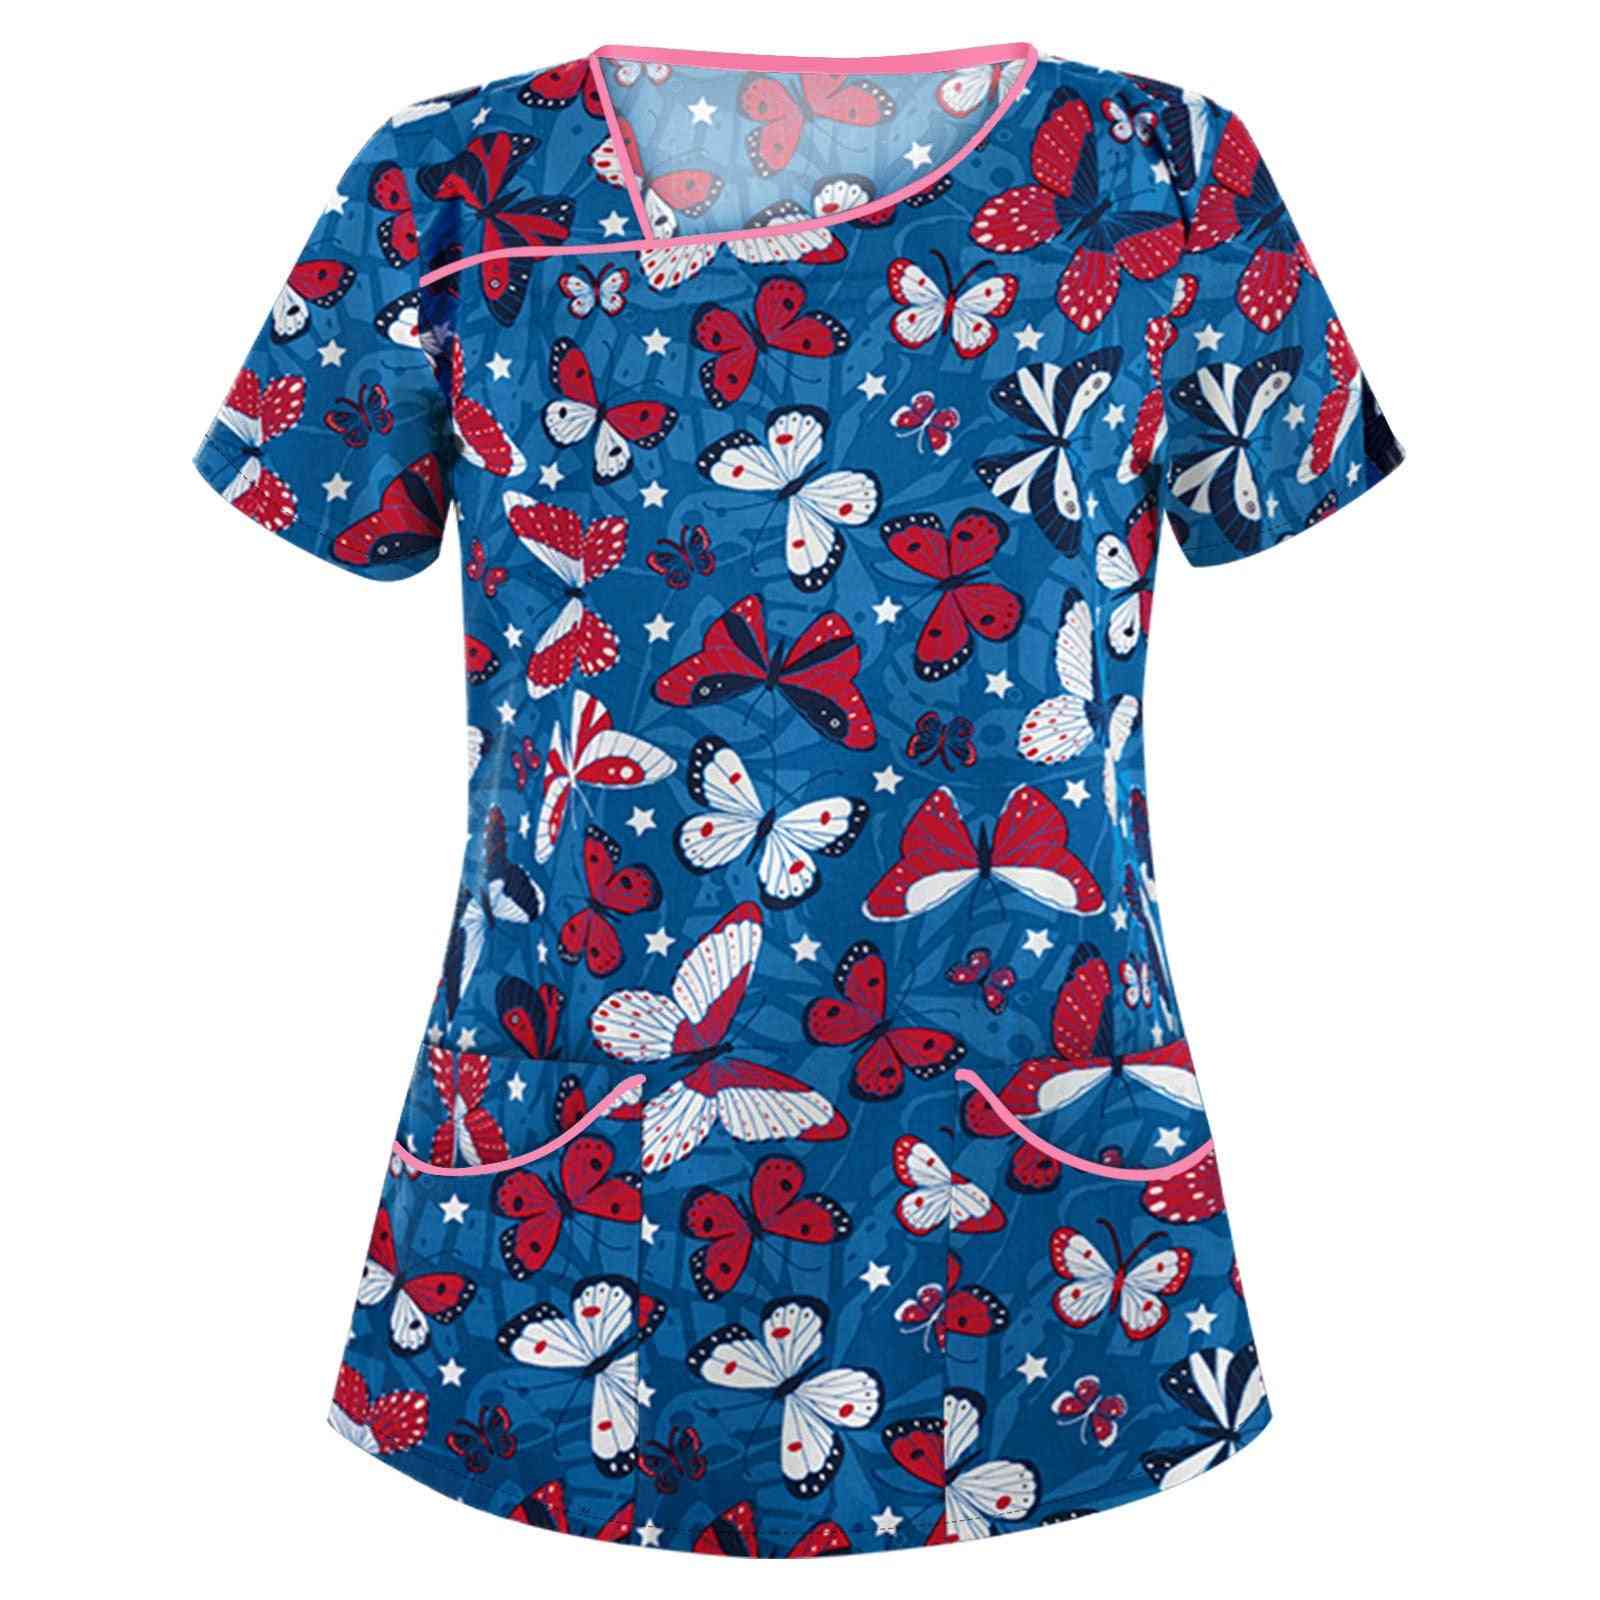 Animal- Butterfly Print, Short-sleeve Irregular Collar, Top Blouse Shirt